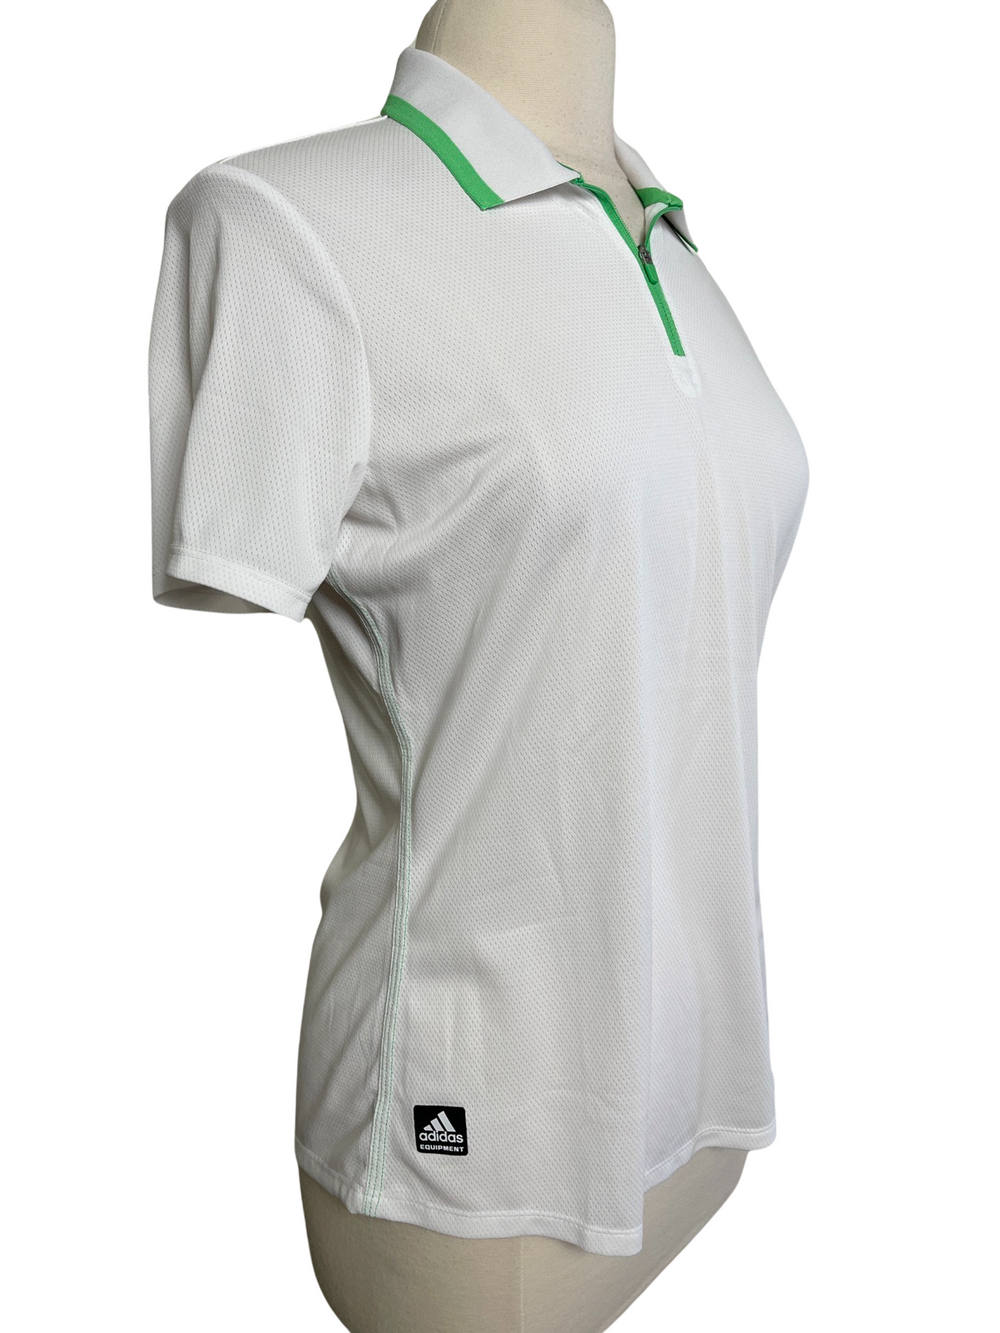 Adidas Polo Short Sleeve Shirt - White with Neon Green - Medium - Skorzie